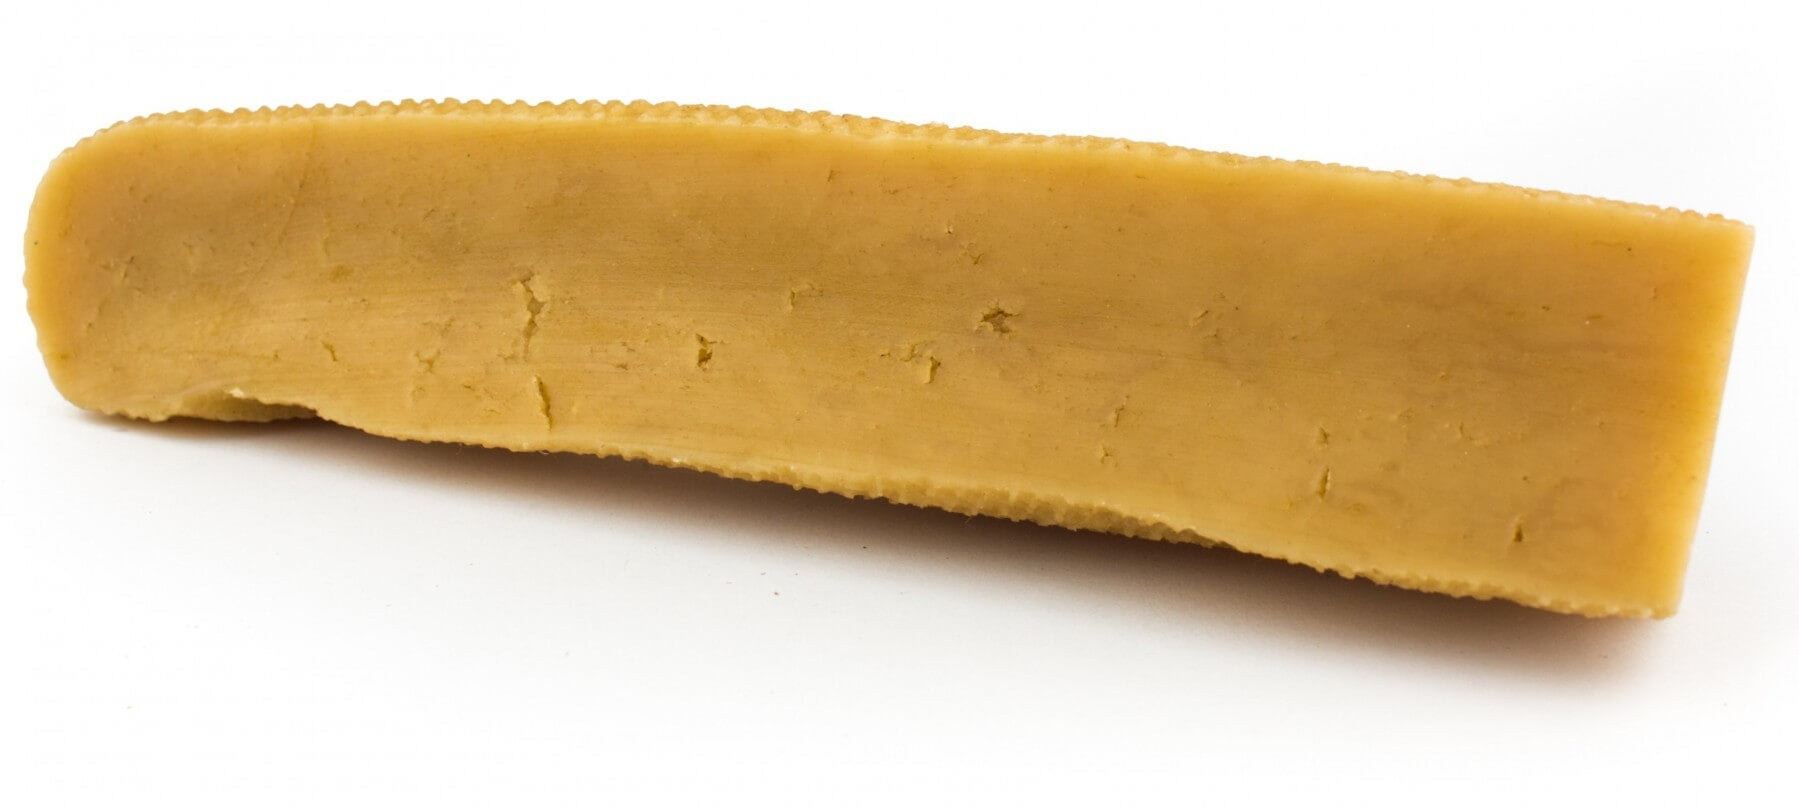 Yeti Natural Yak Cheese Long Lasting Dog Chews for Aggressive